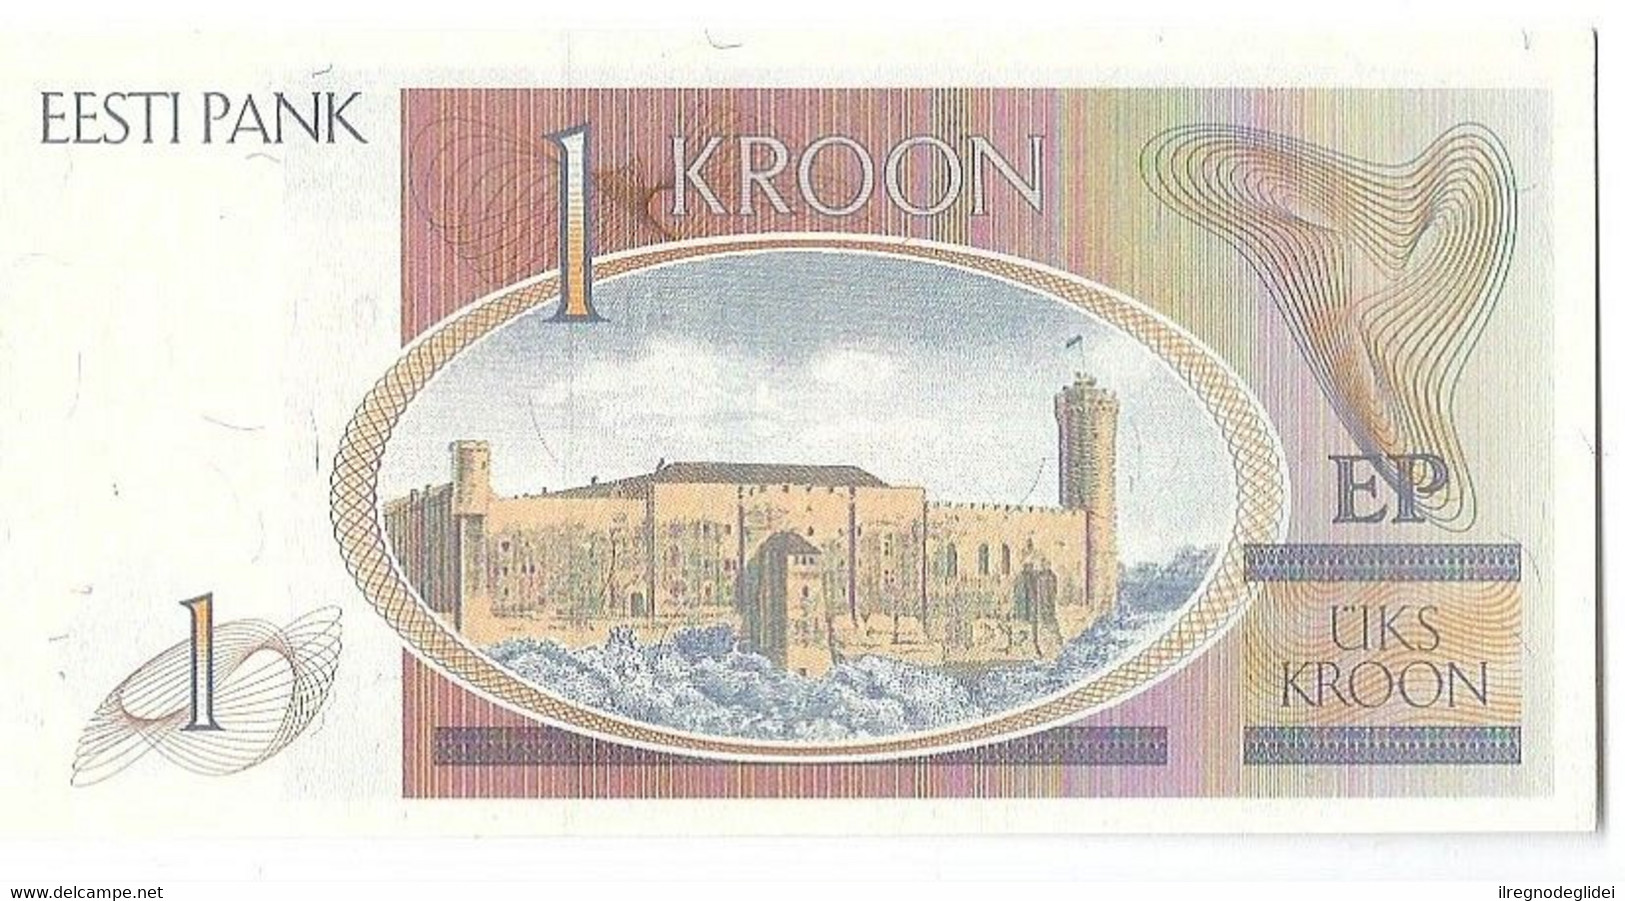 ESTONIA - 1 KORONA KROON - WYSIWYG - N° SERIALE AD1061260 - CARTAMONETA - PAPER MONEY - Estonia